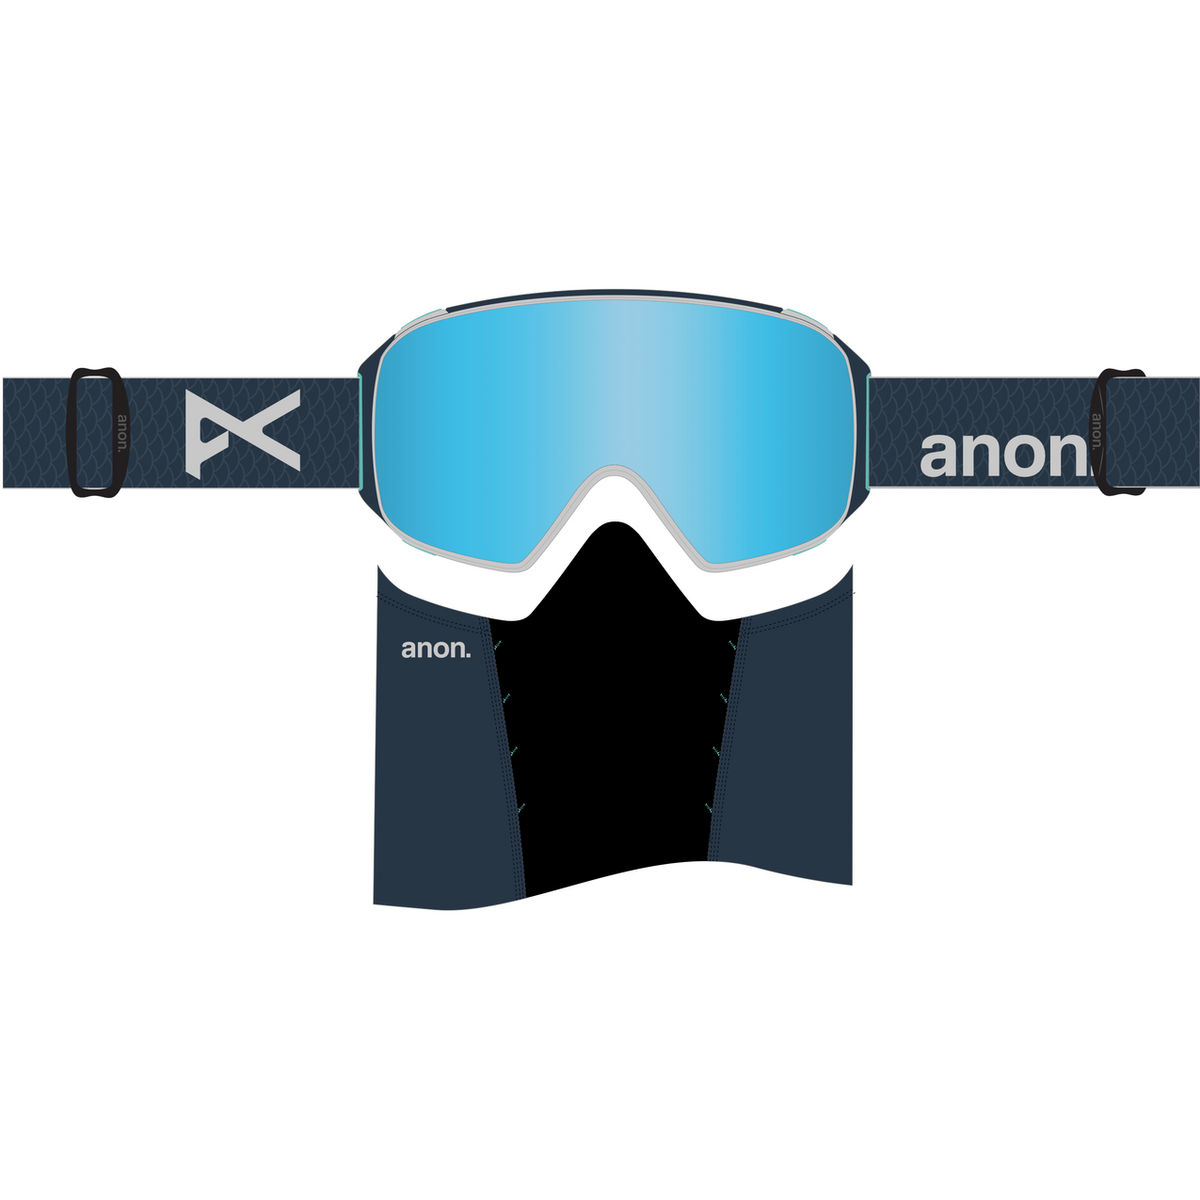 Anon M4 Toric Goggles + Bonus Lens + MFI Face Mask, Low Bridge Fit